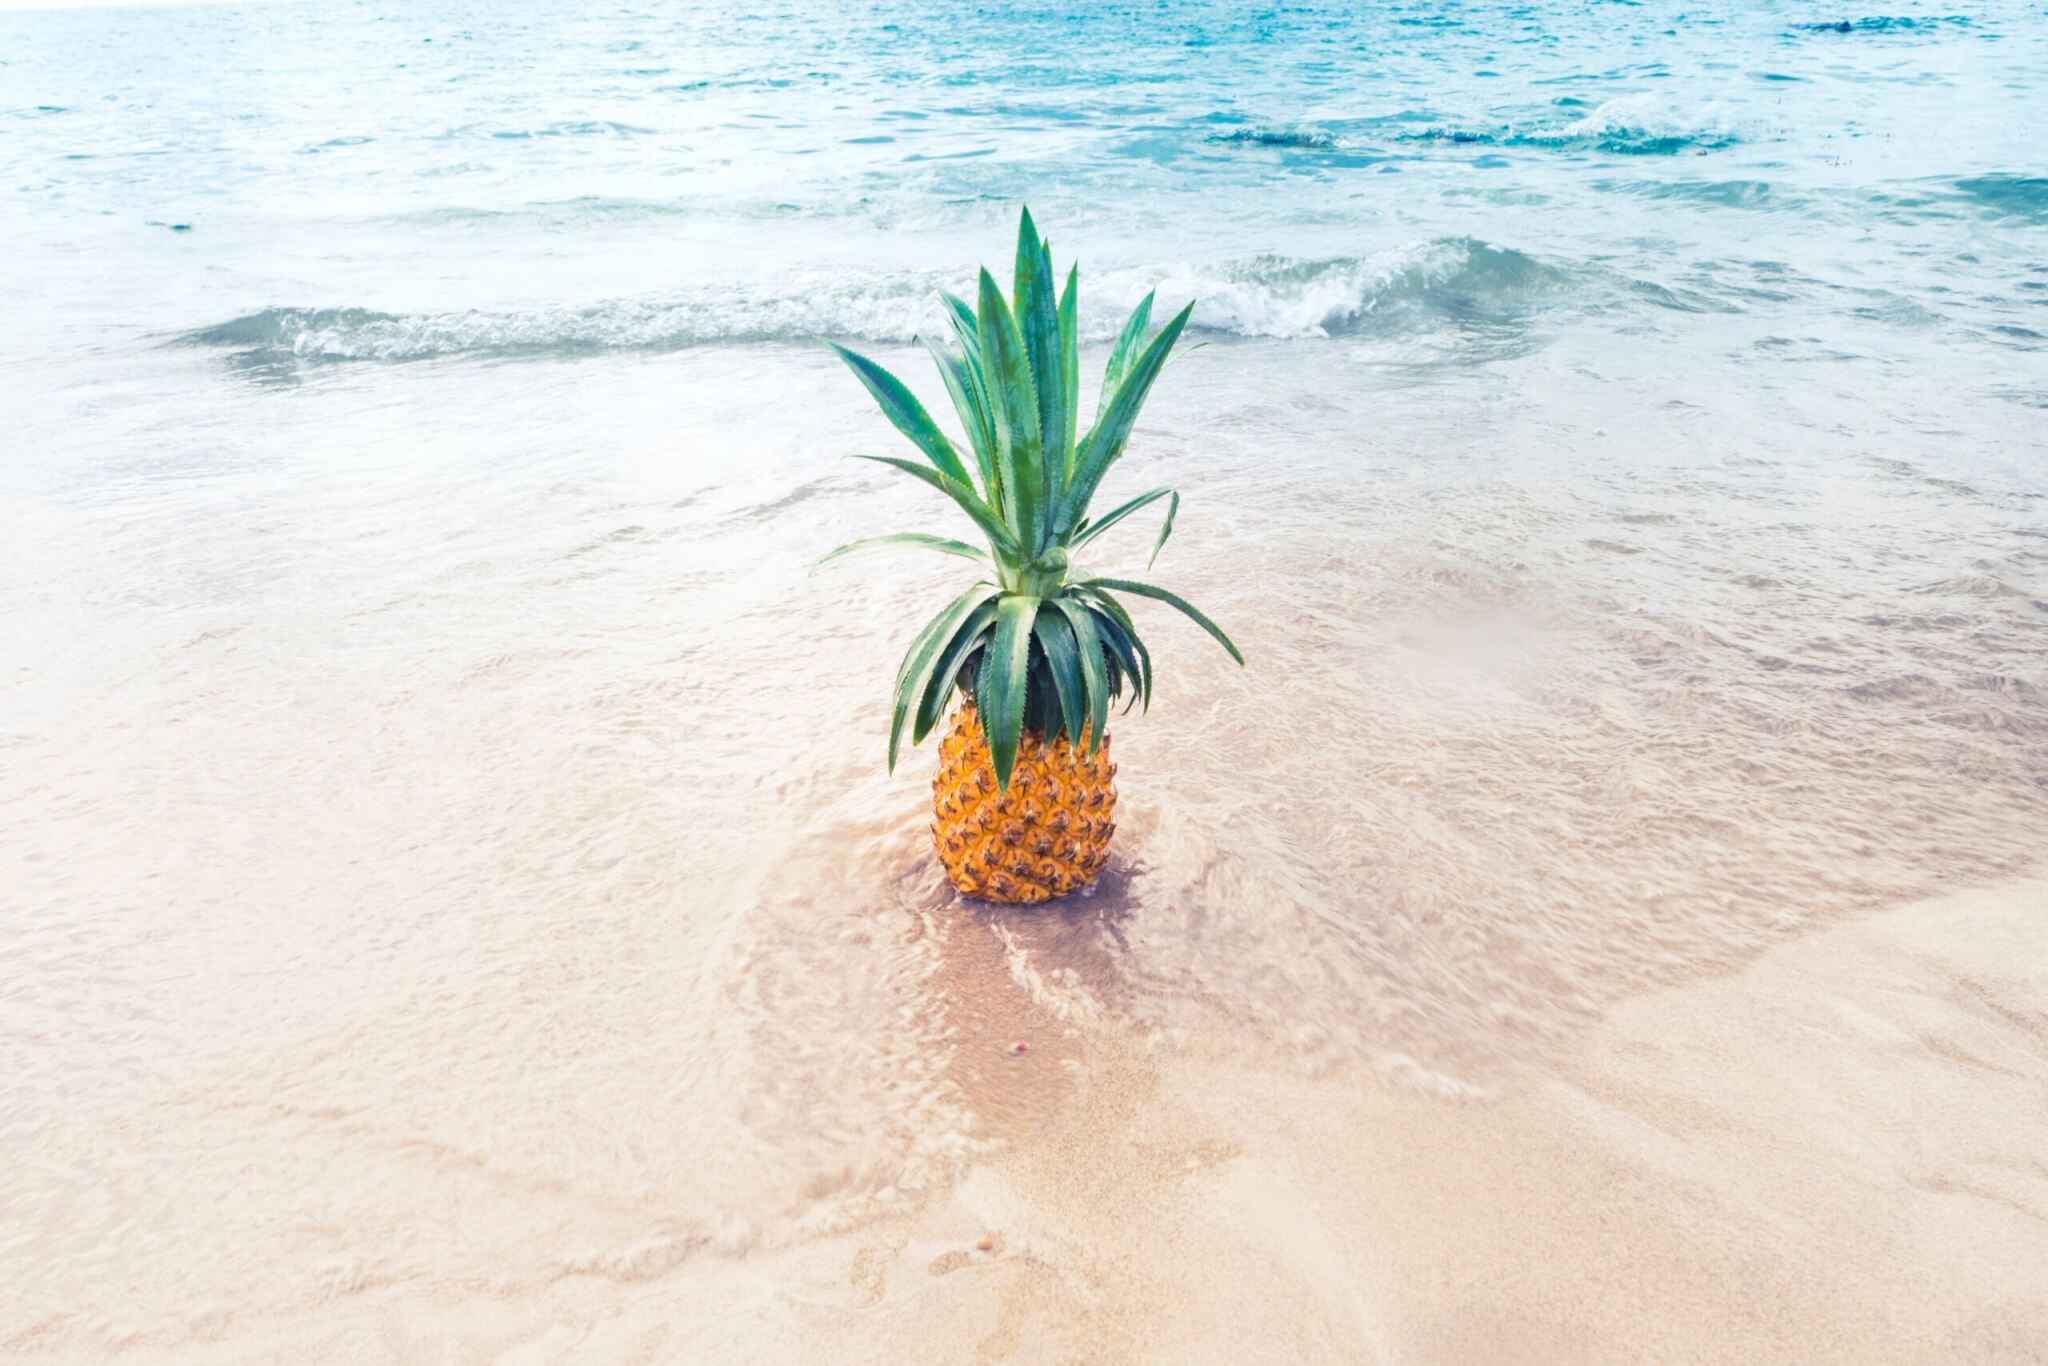 pineapple on the beach in the ocean